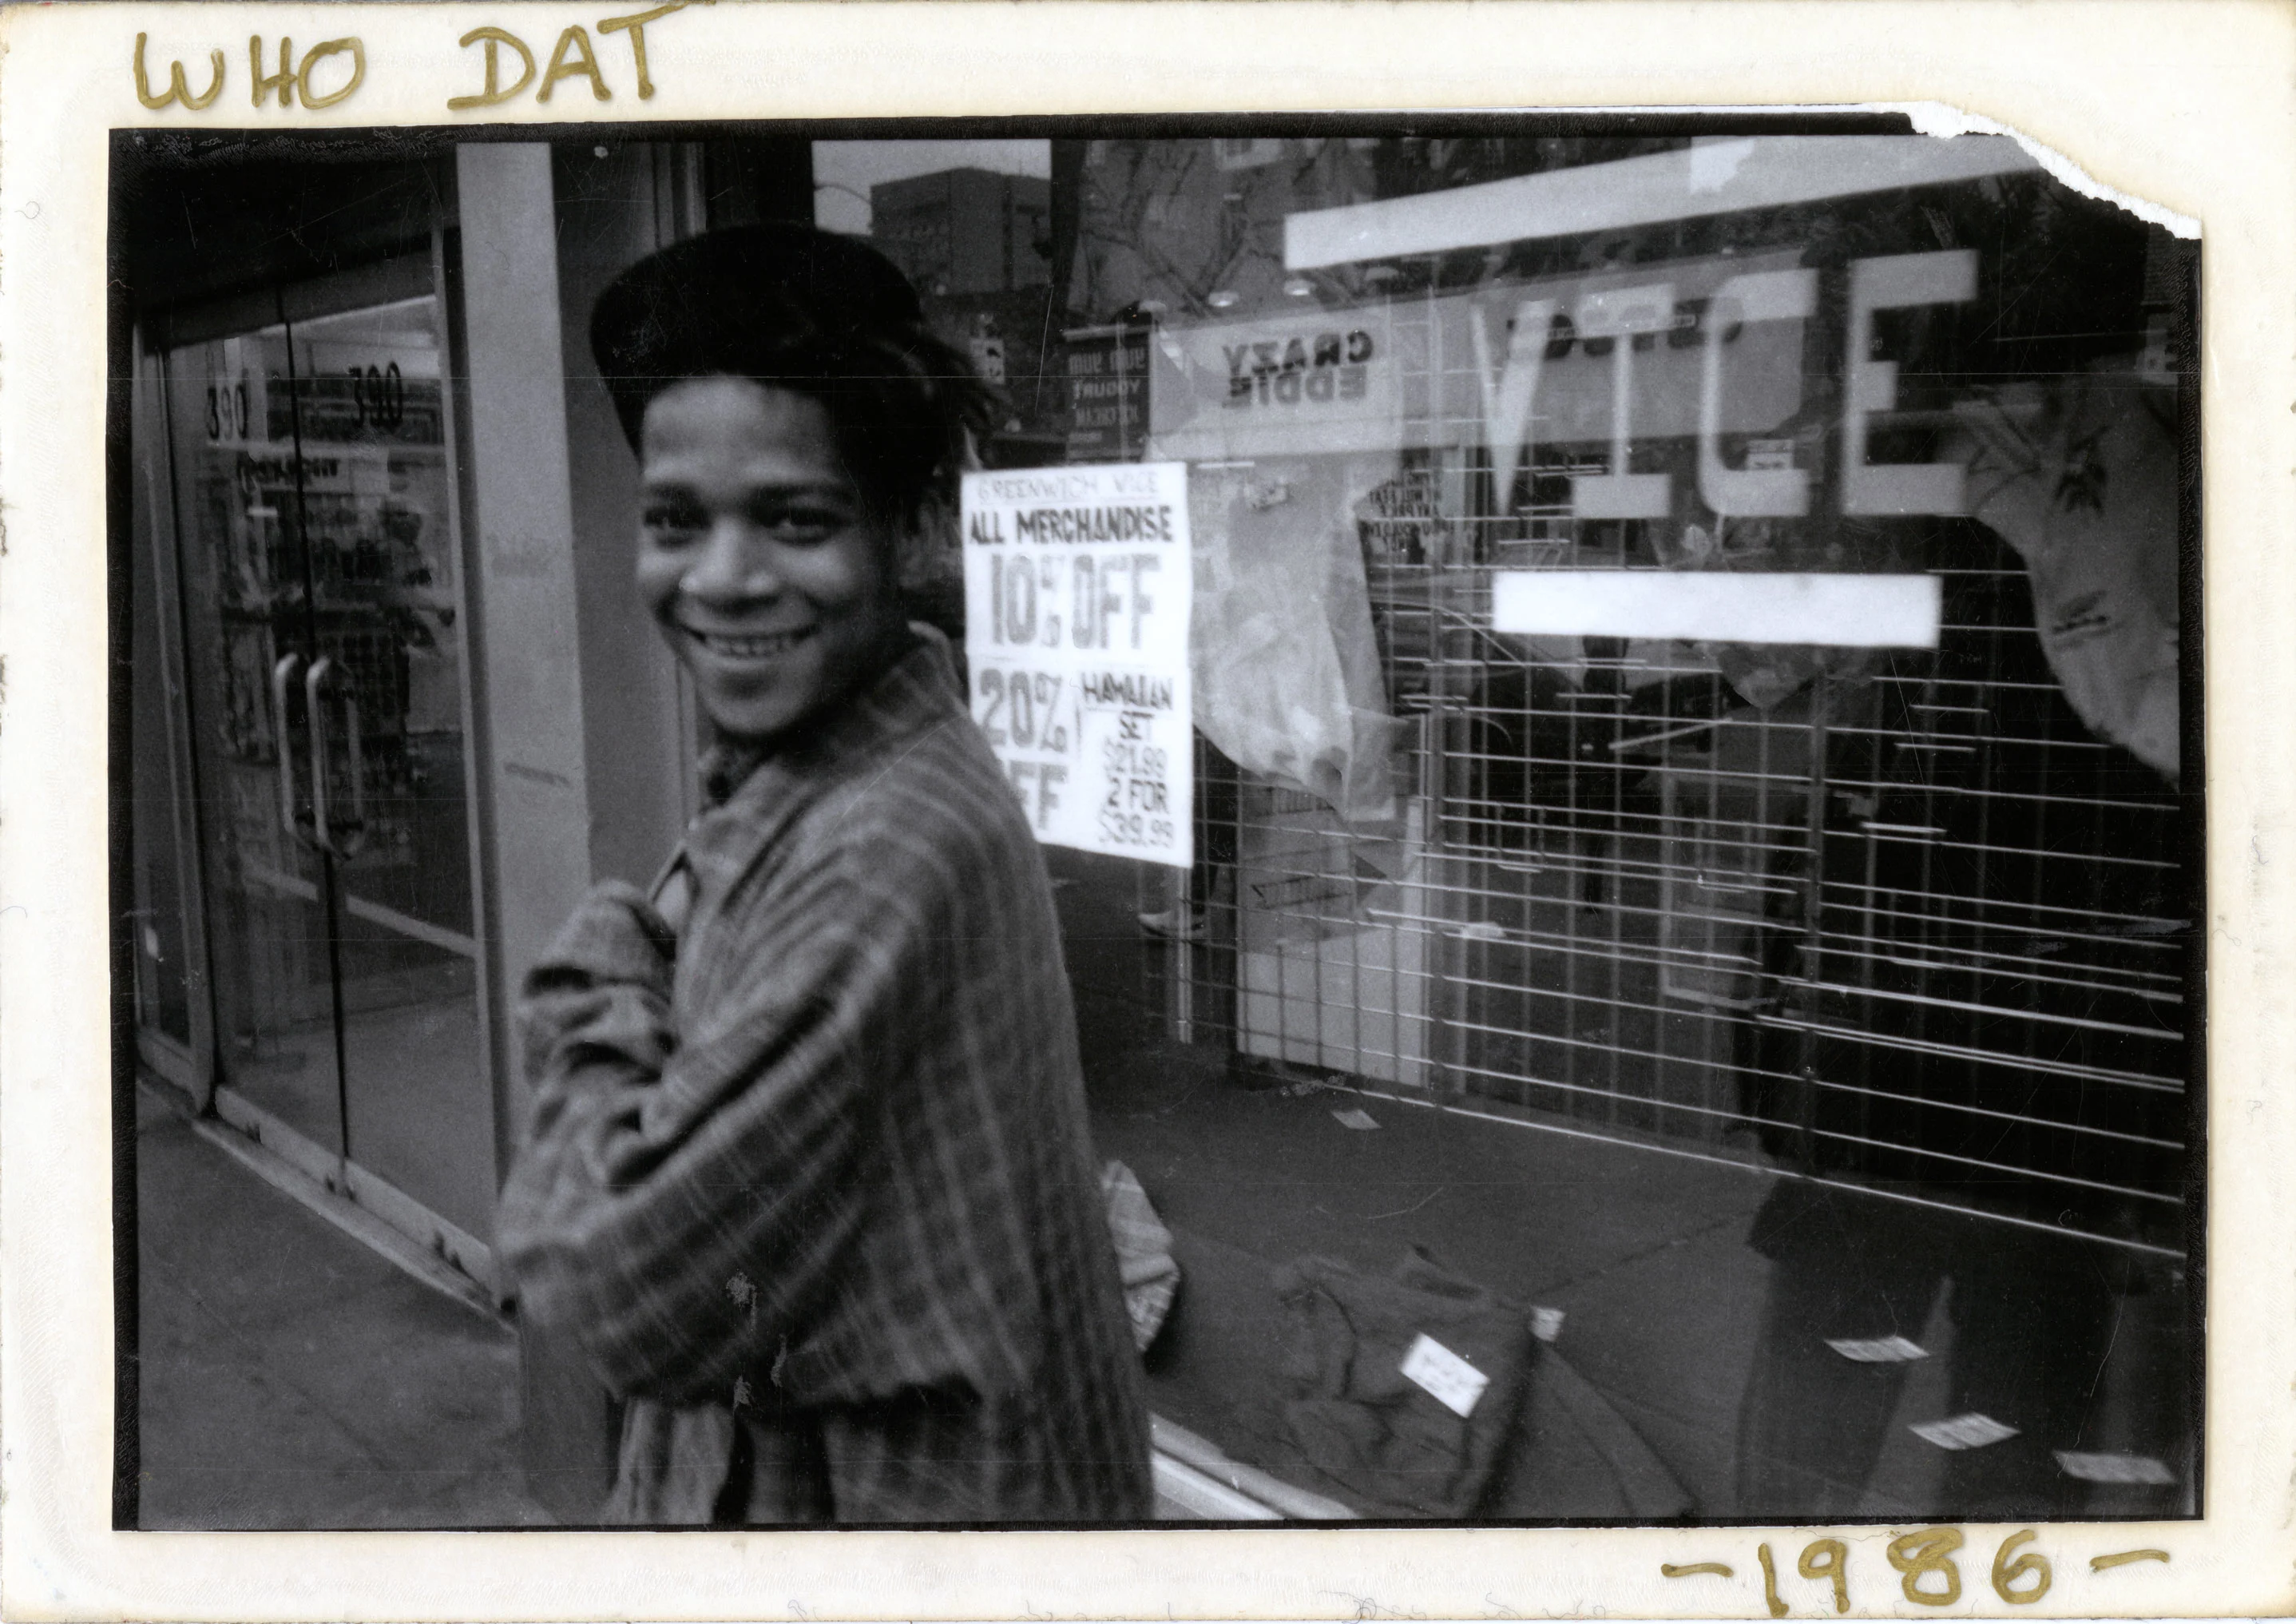 Jean-Michel, pictured here in 1986 Ph. Jean-Michel Basquiat, © The Estate of Jean-Michel Basquiat